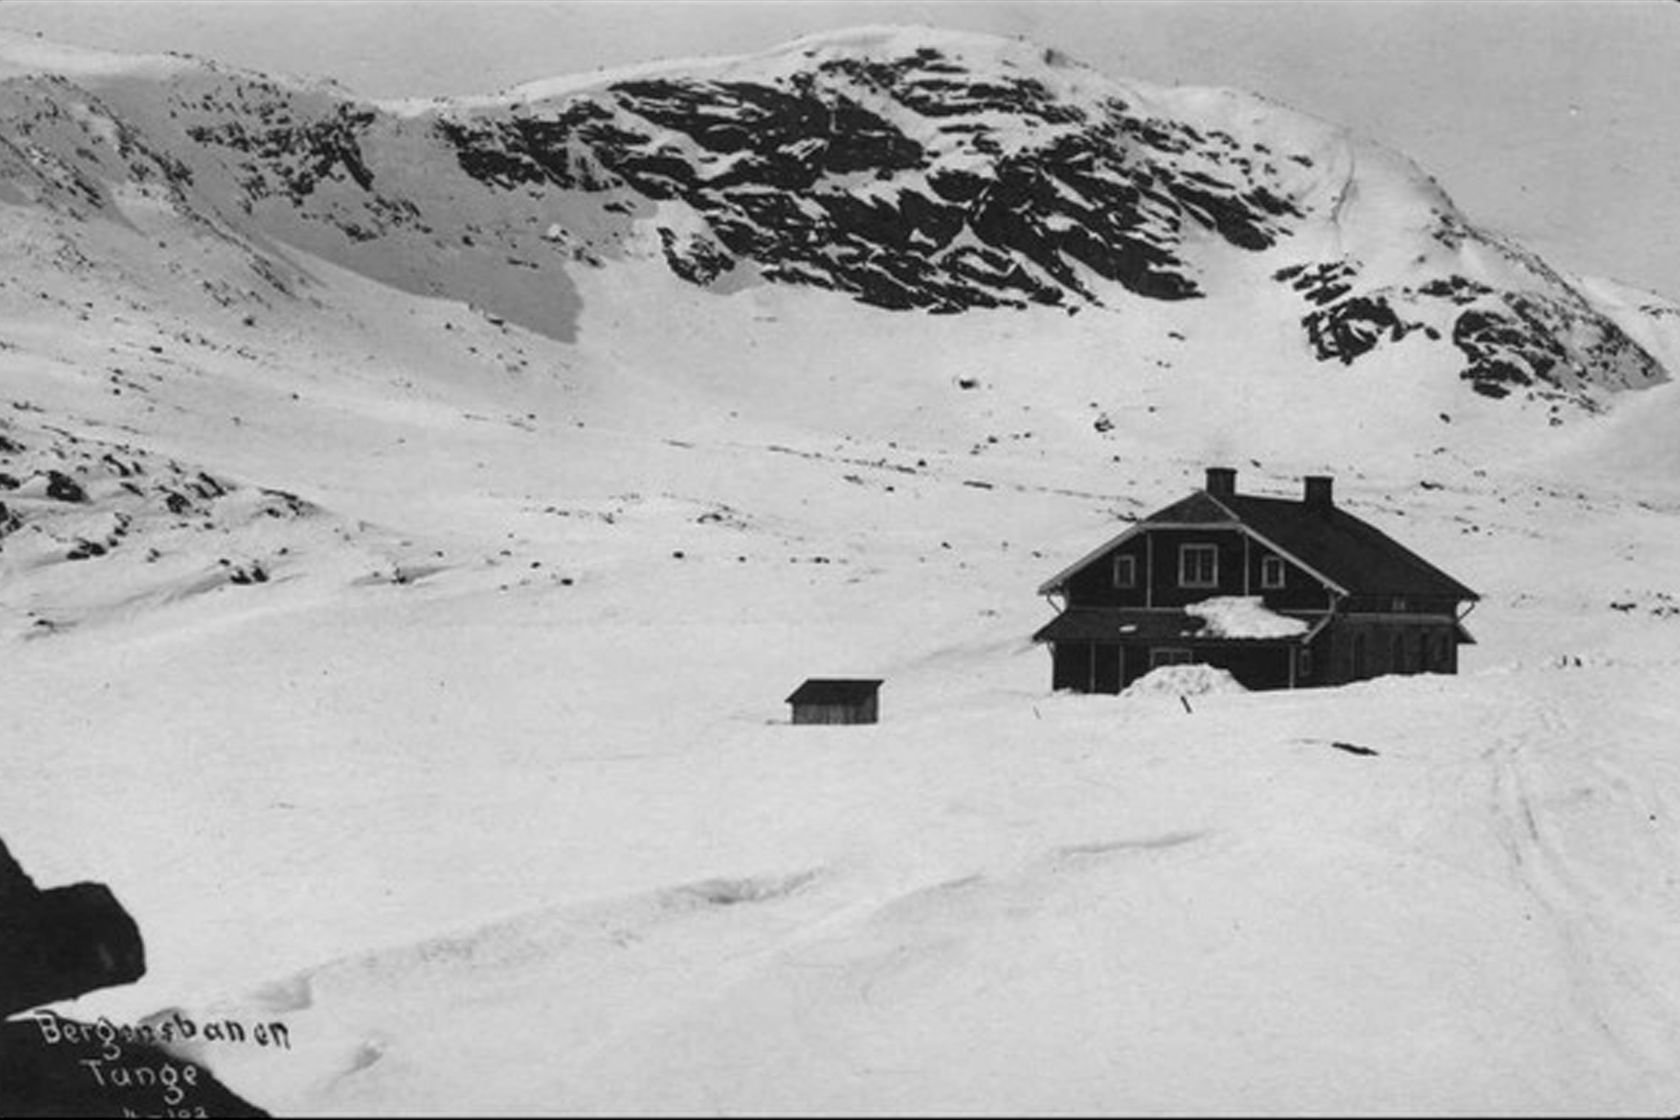 Gammelt hus i snø